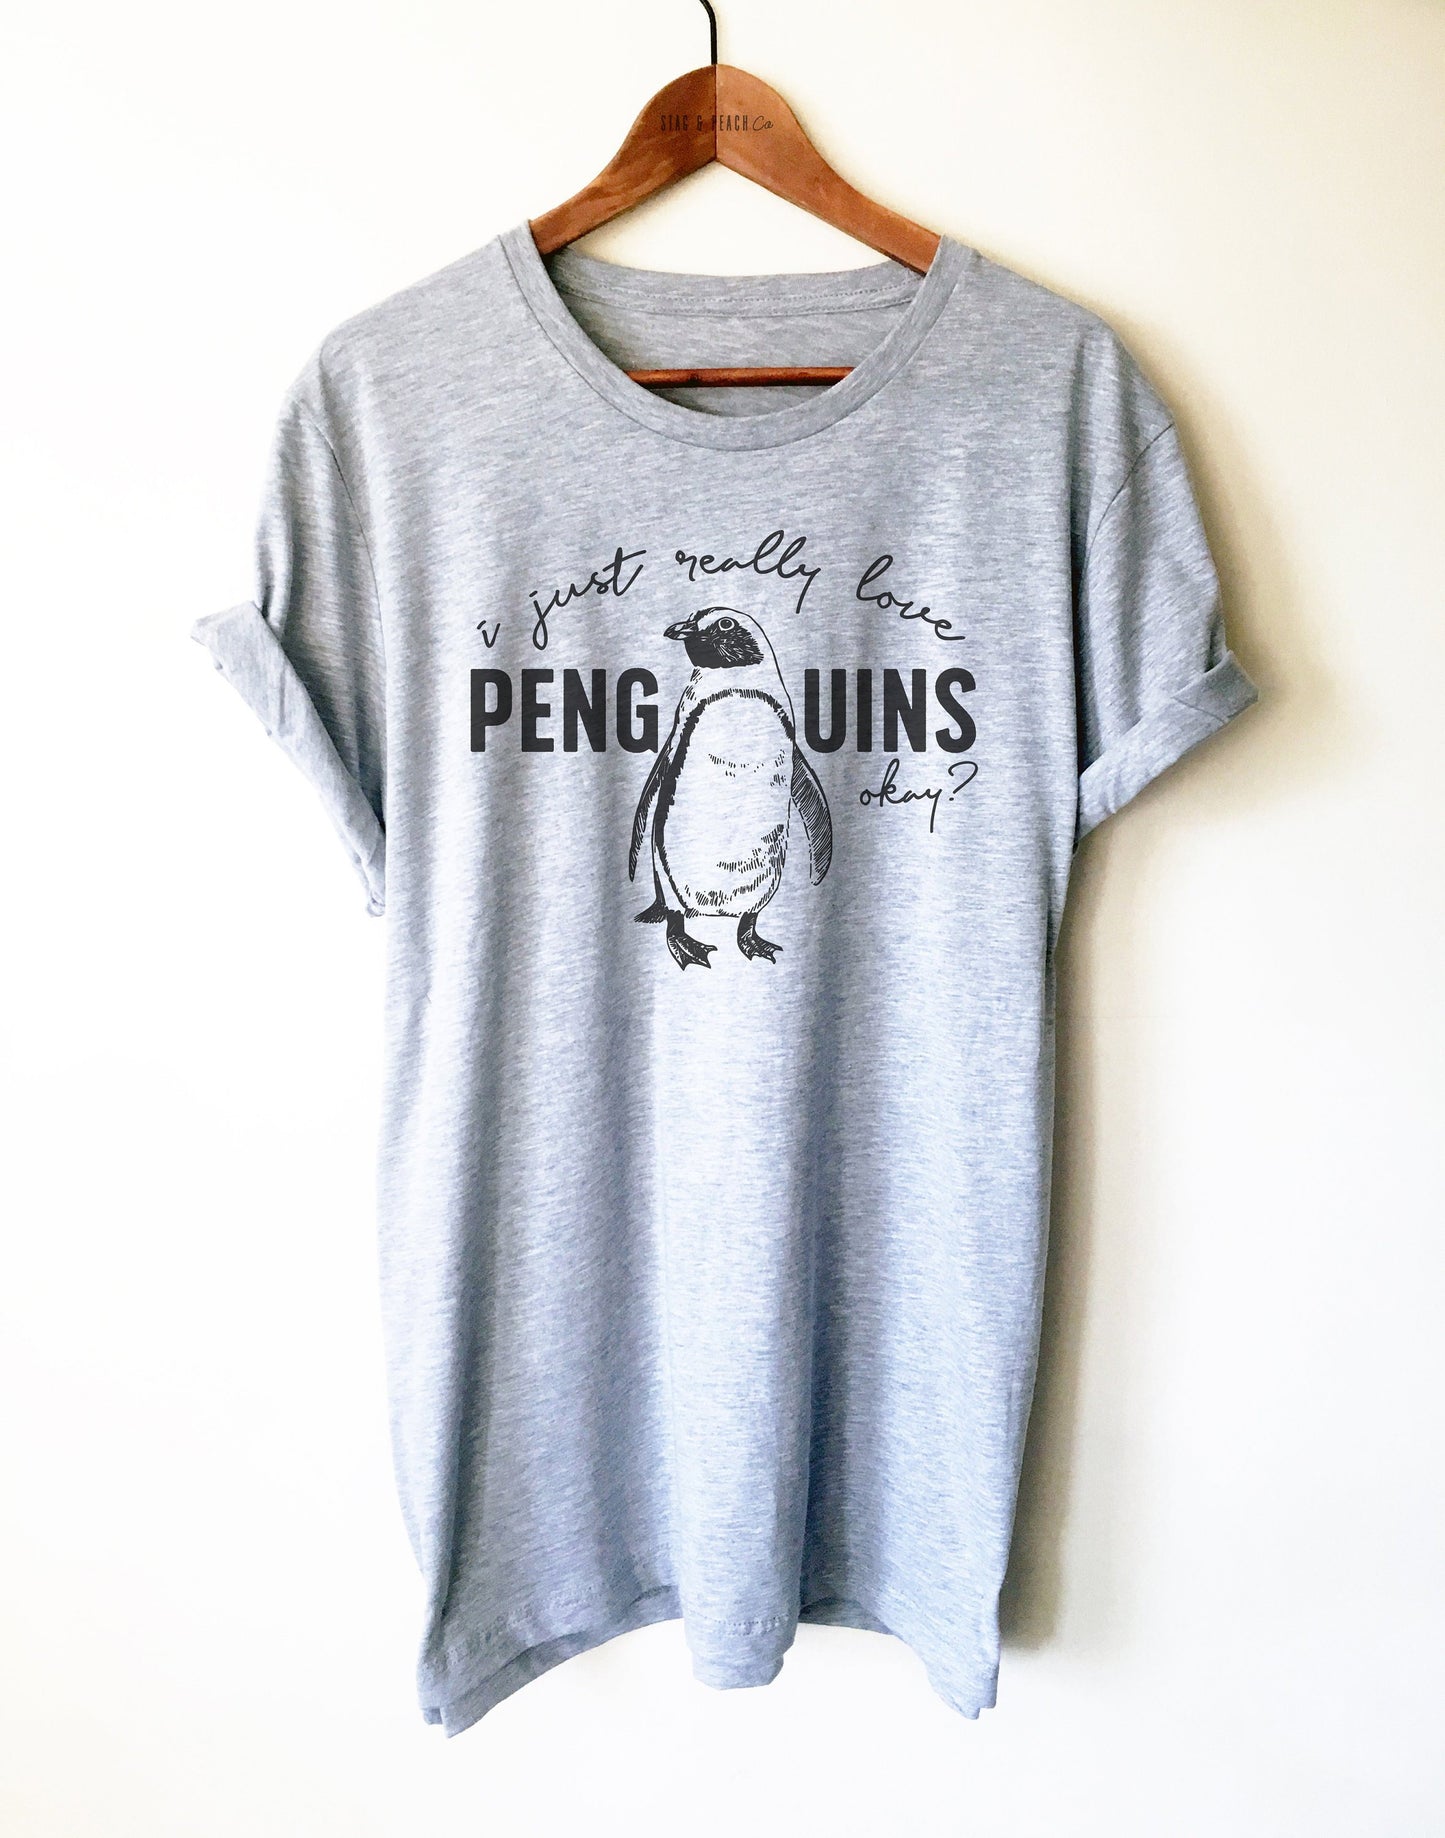 I Just Really Love Penguins Unisex Shirt -Funny Penguin Shirt, Cute Penguin Tee, Penguin Birthday Gift, Marine Ecologist Shirt, Oceanography